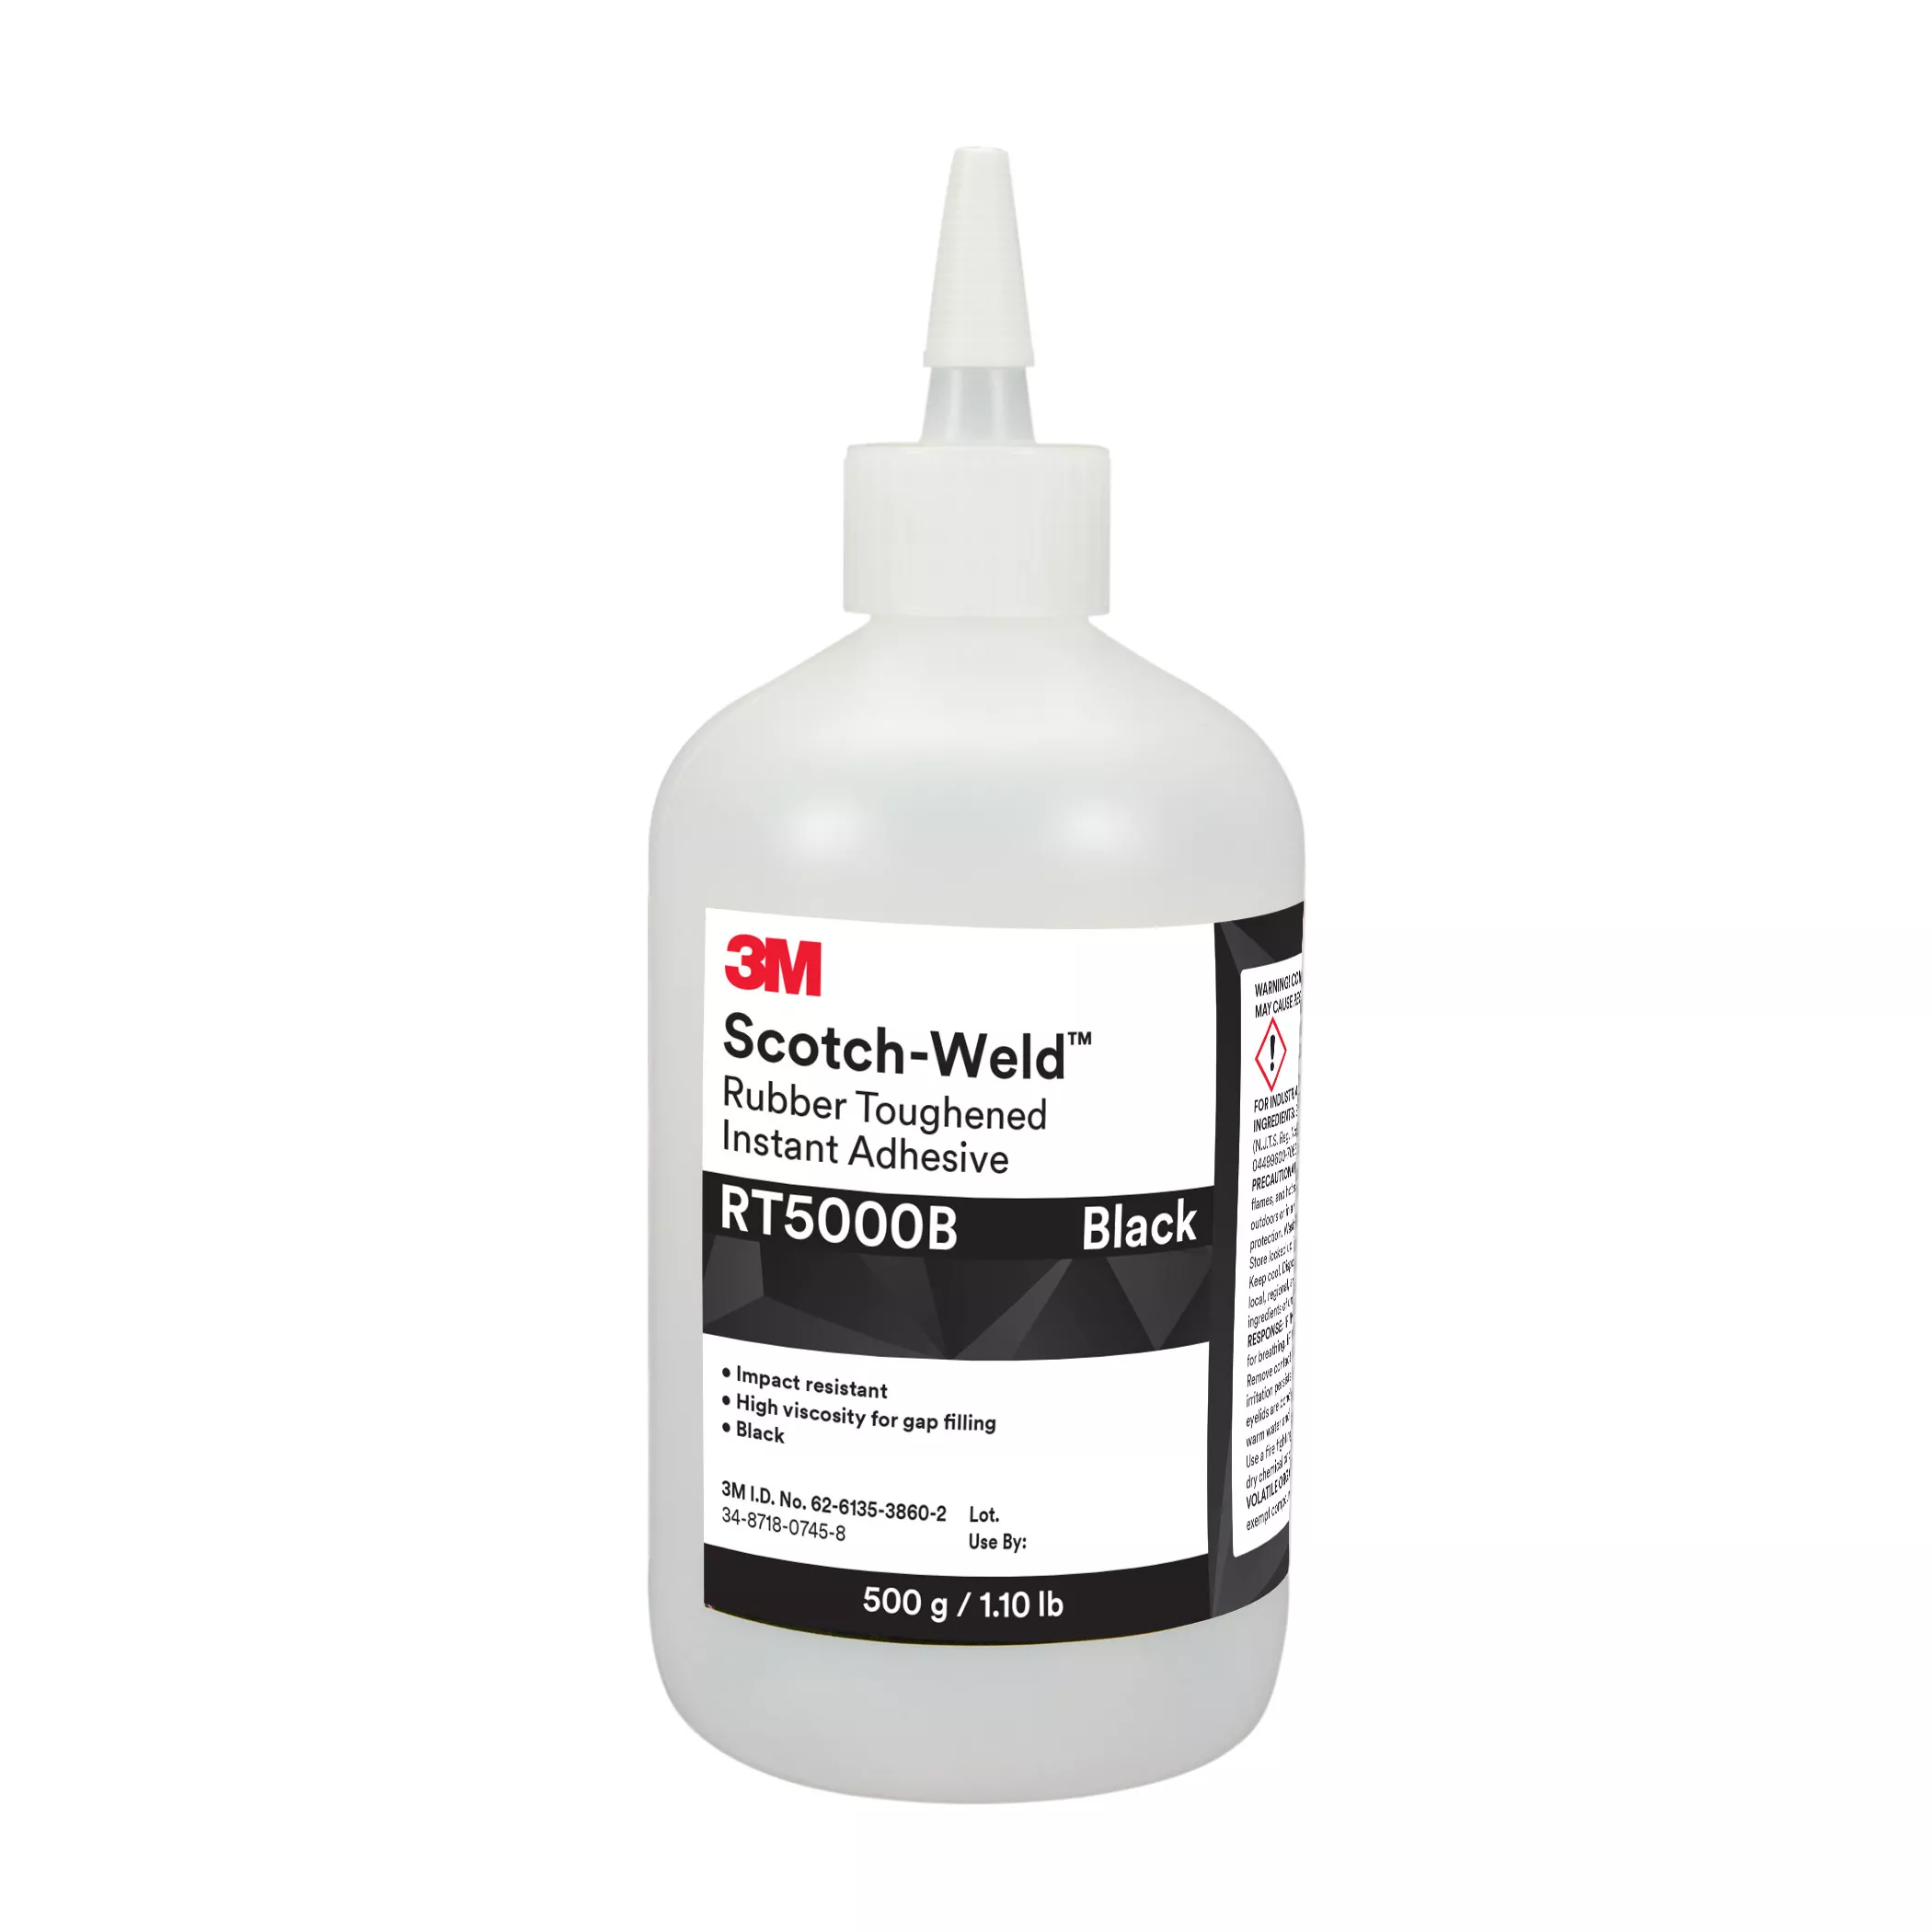 3M™ Scotch-Weld™ Rubber Toughened Instant Adhesive RT5000B, Black, 500
Gram, 1 Bottle/Case